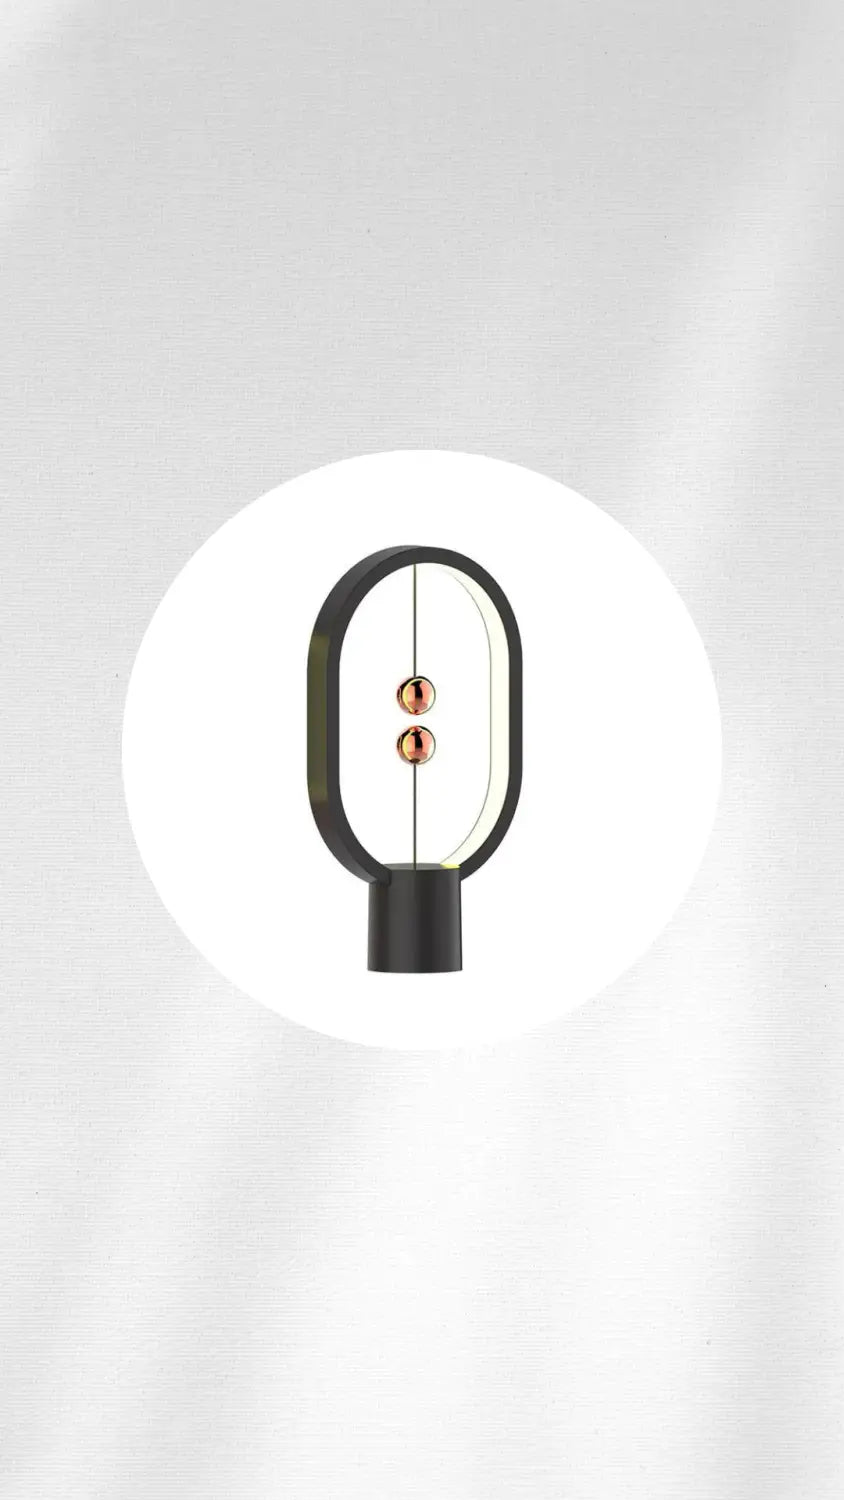 Magnetic LED Night Light Lamp | Warm Night Light for Home, Office